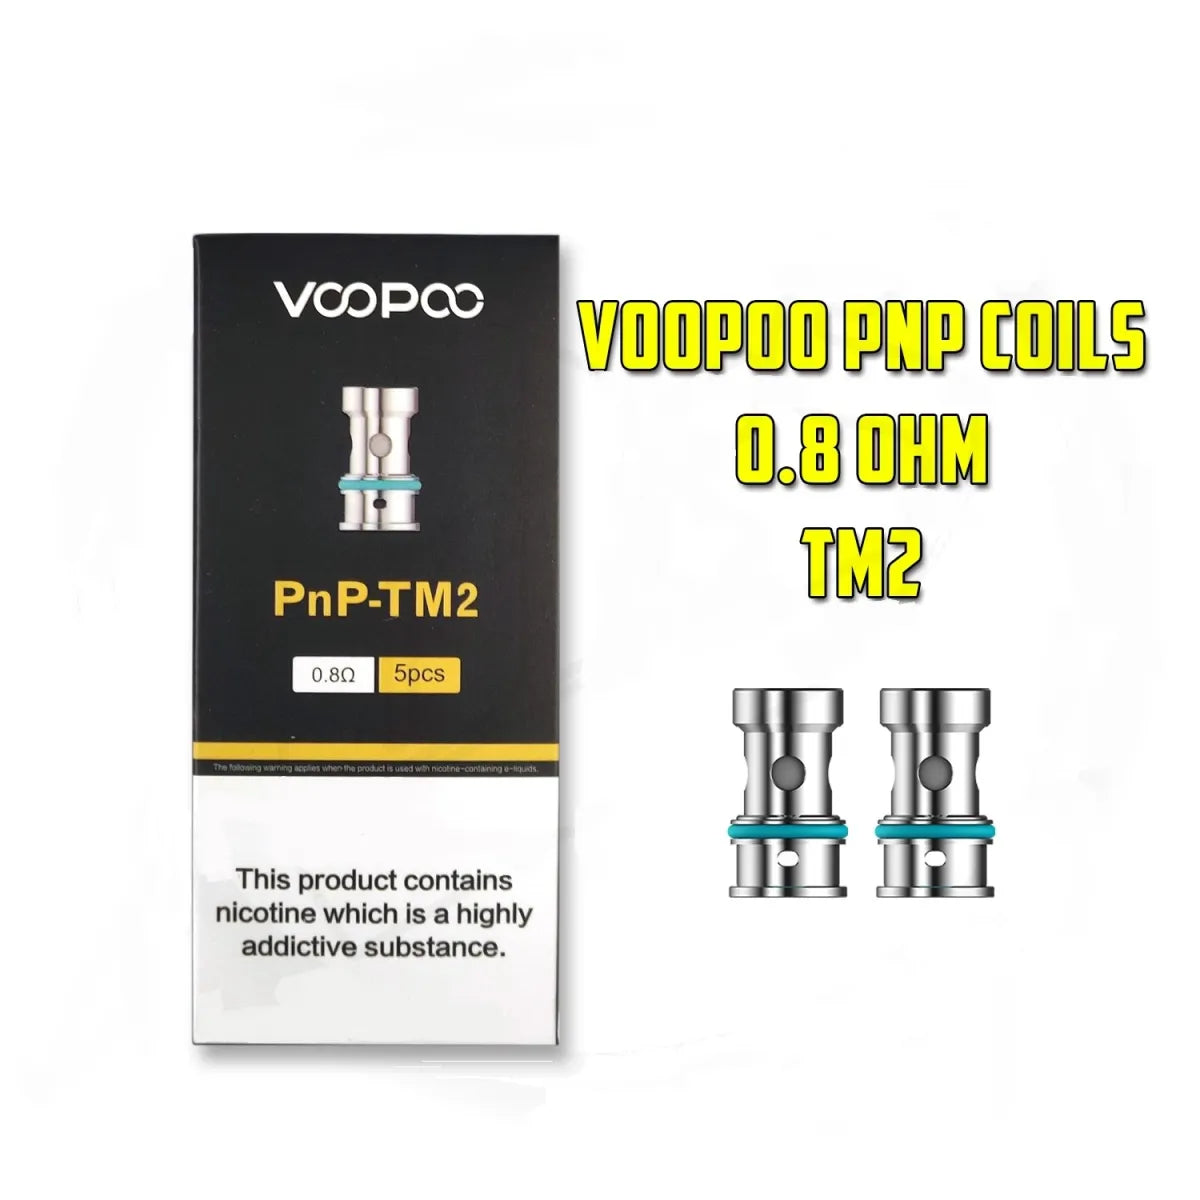 VOOPOO PNP TM2 0.8 OHM COIL